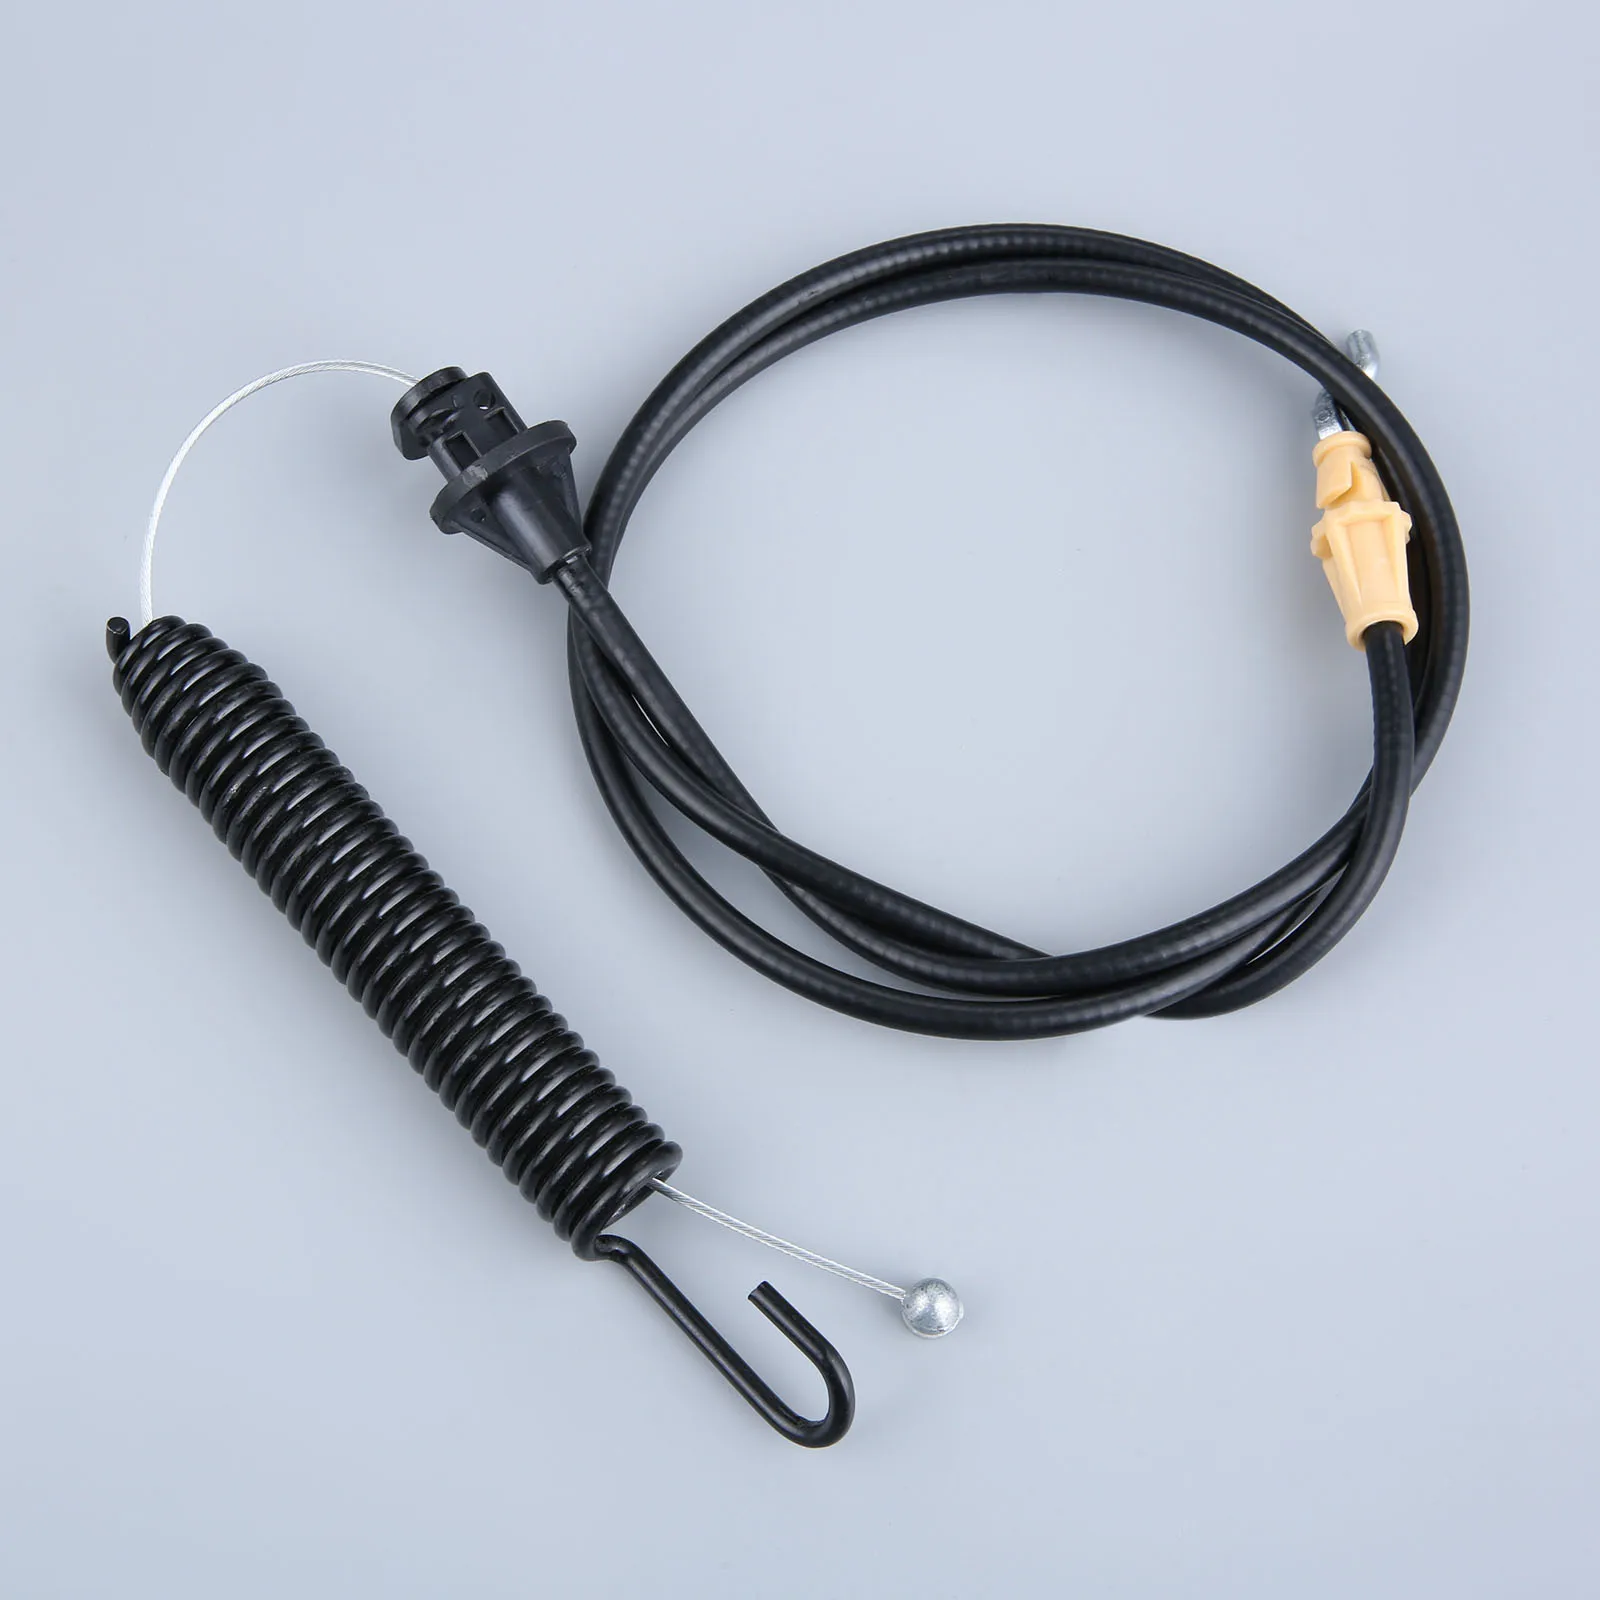 Blade Deck Engagement Cable Replace946-04173C 946-04173B 746-04173 MTD Troybilt 